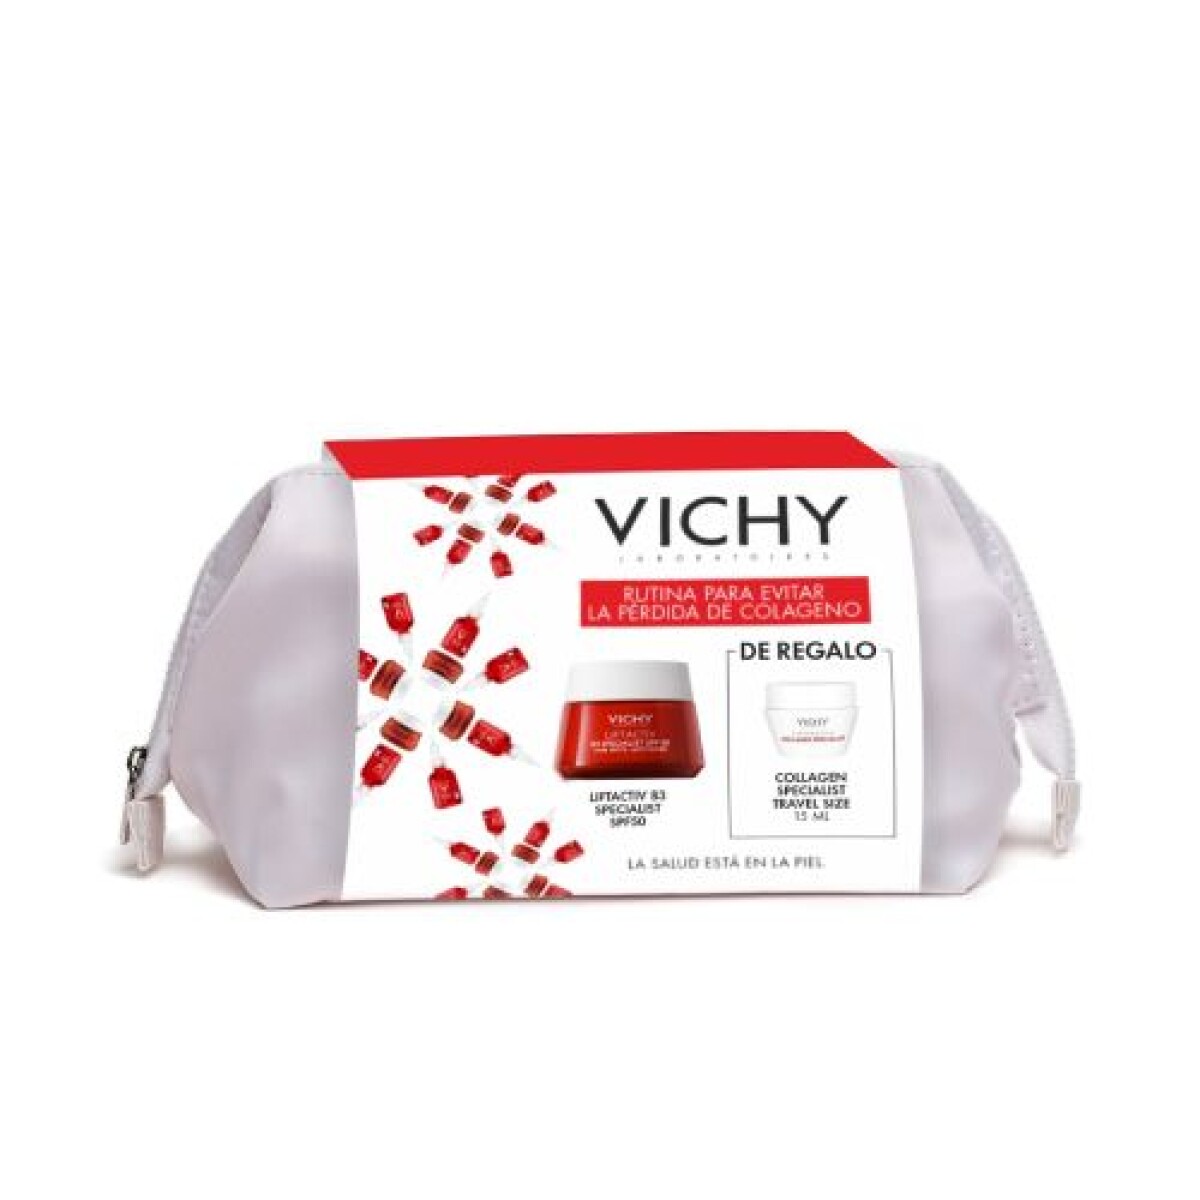 Rutina VICHY Pro-Colágeno Liftactiv B3 + Collagen Specialist 